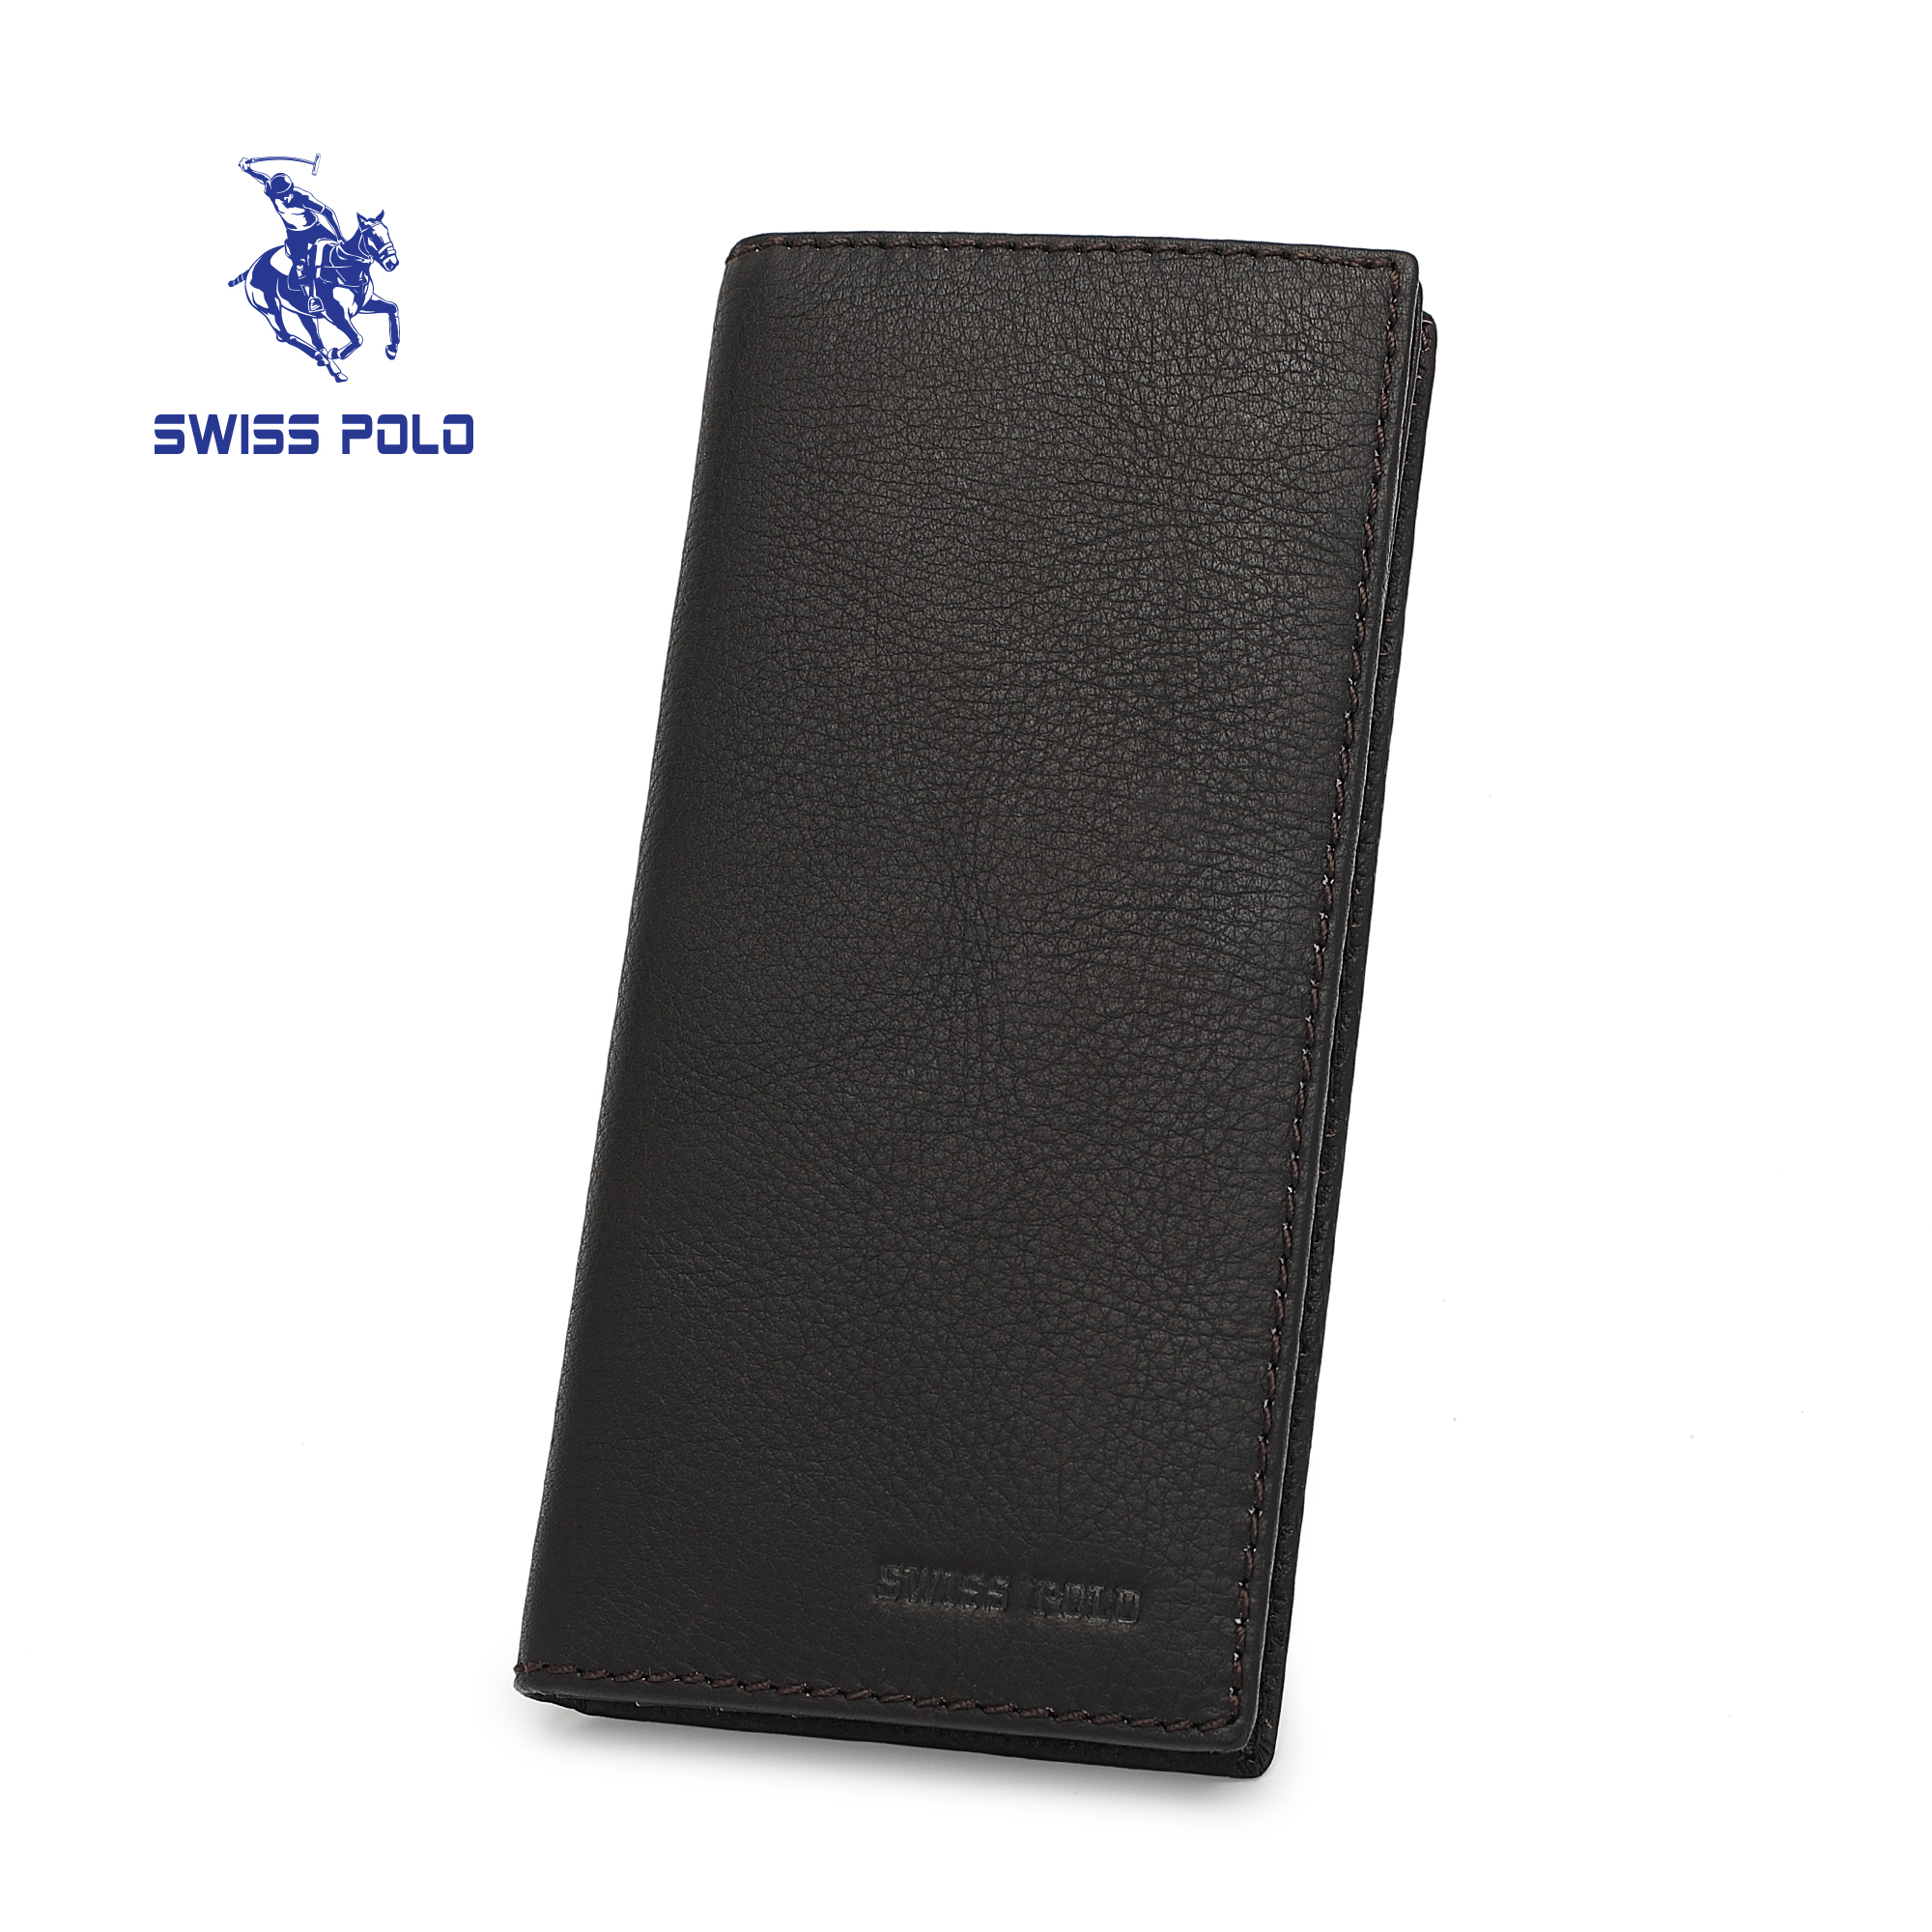 SWISS POLO Genuine Leather RFID Long Wallet SW 177-1 DARK COFFEE